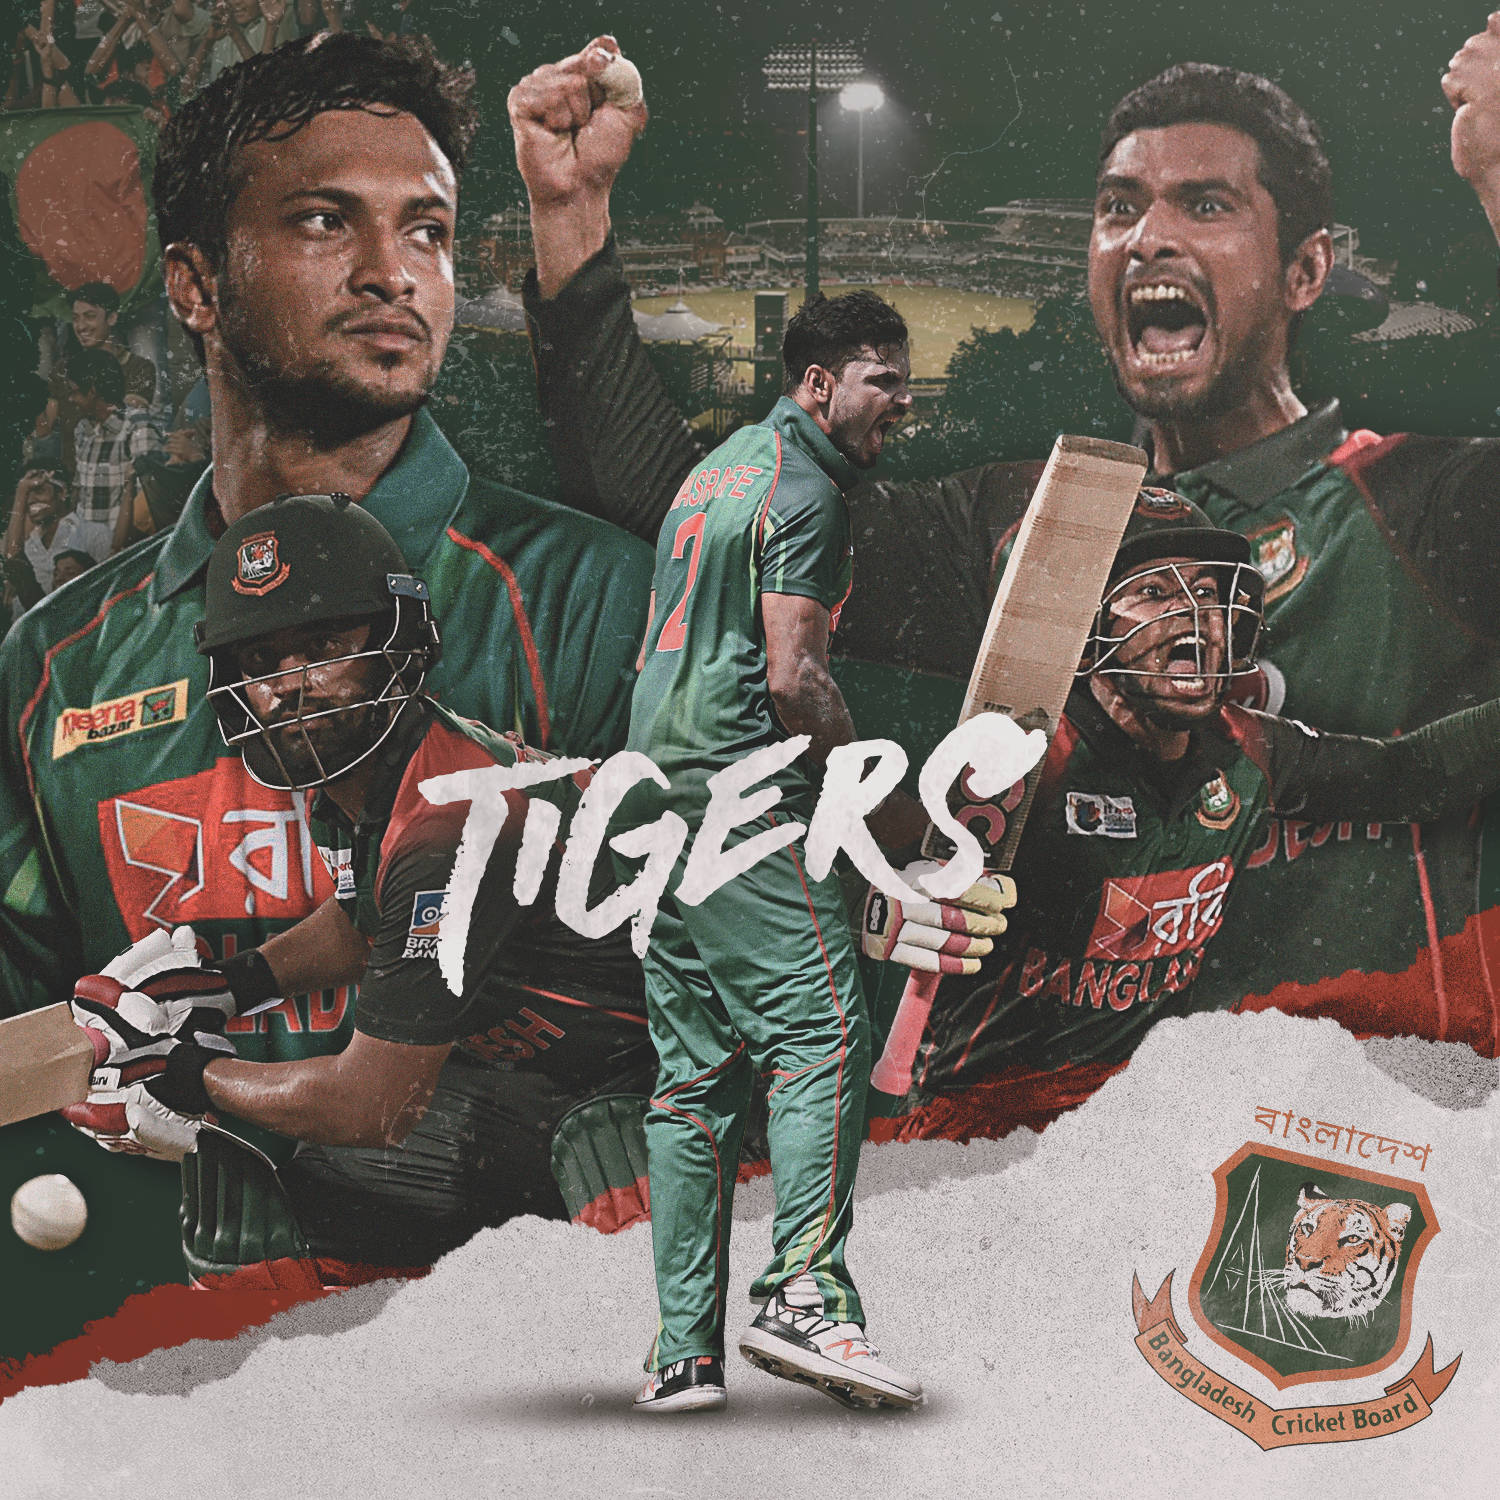 Bangladeschcricket-team Tigers Poster Wallpaper